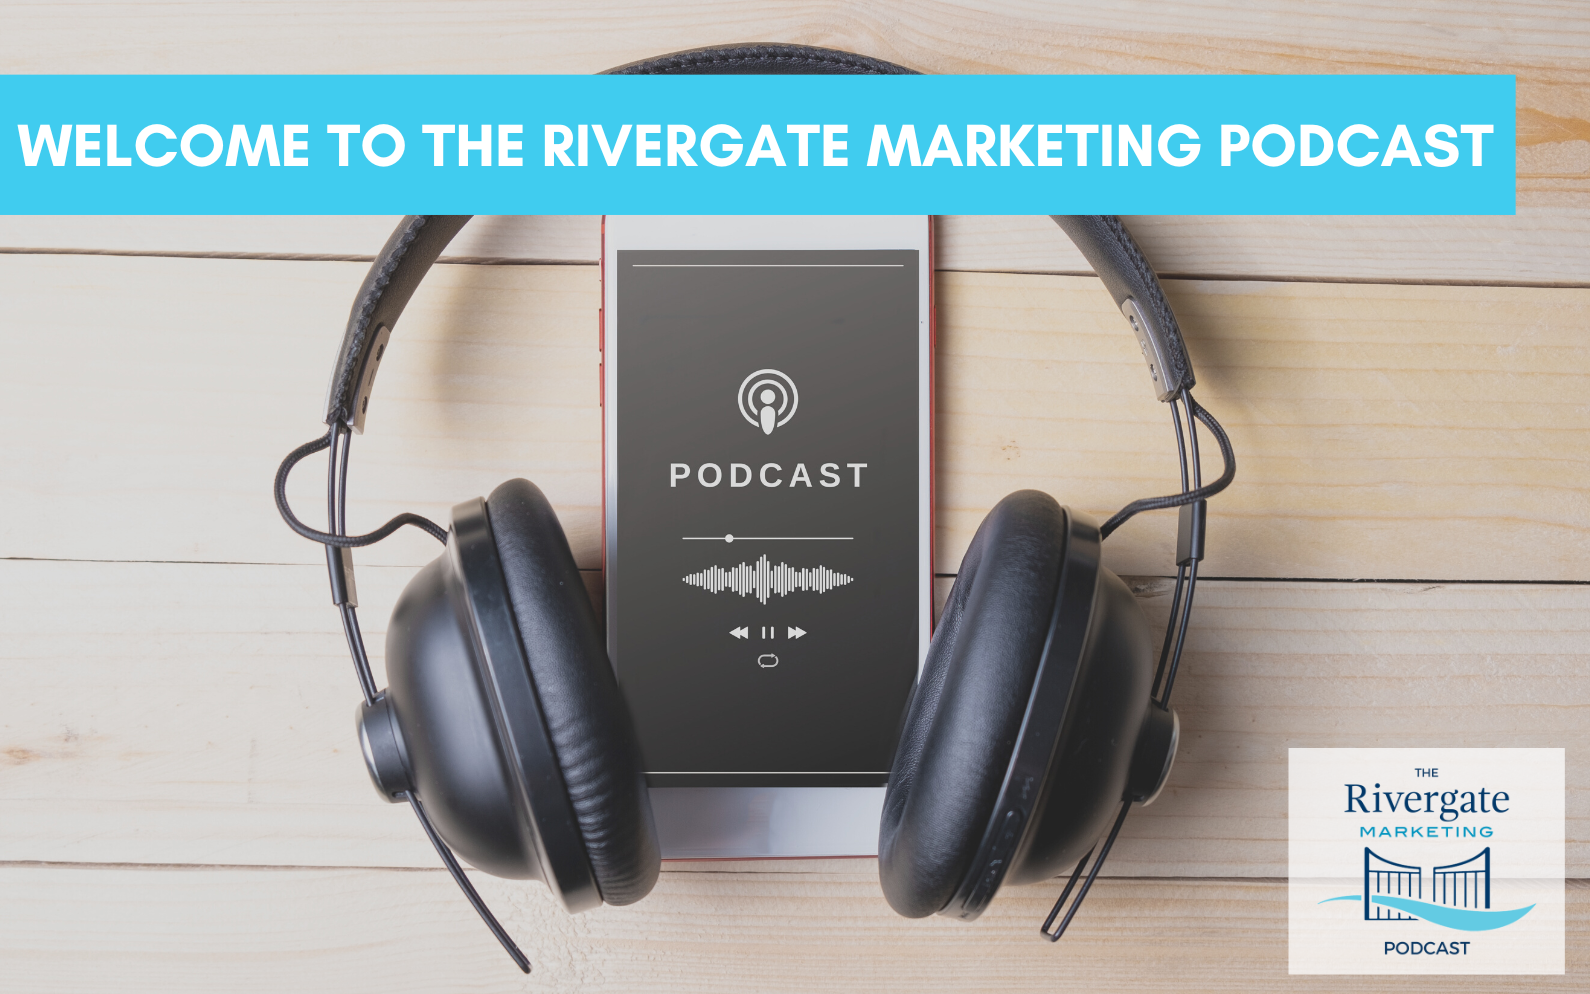 Rivergate Marketing launches new B2B digital marketing podcast.